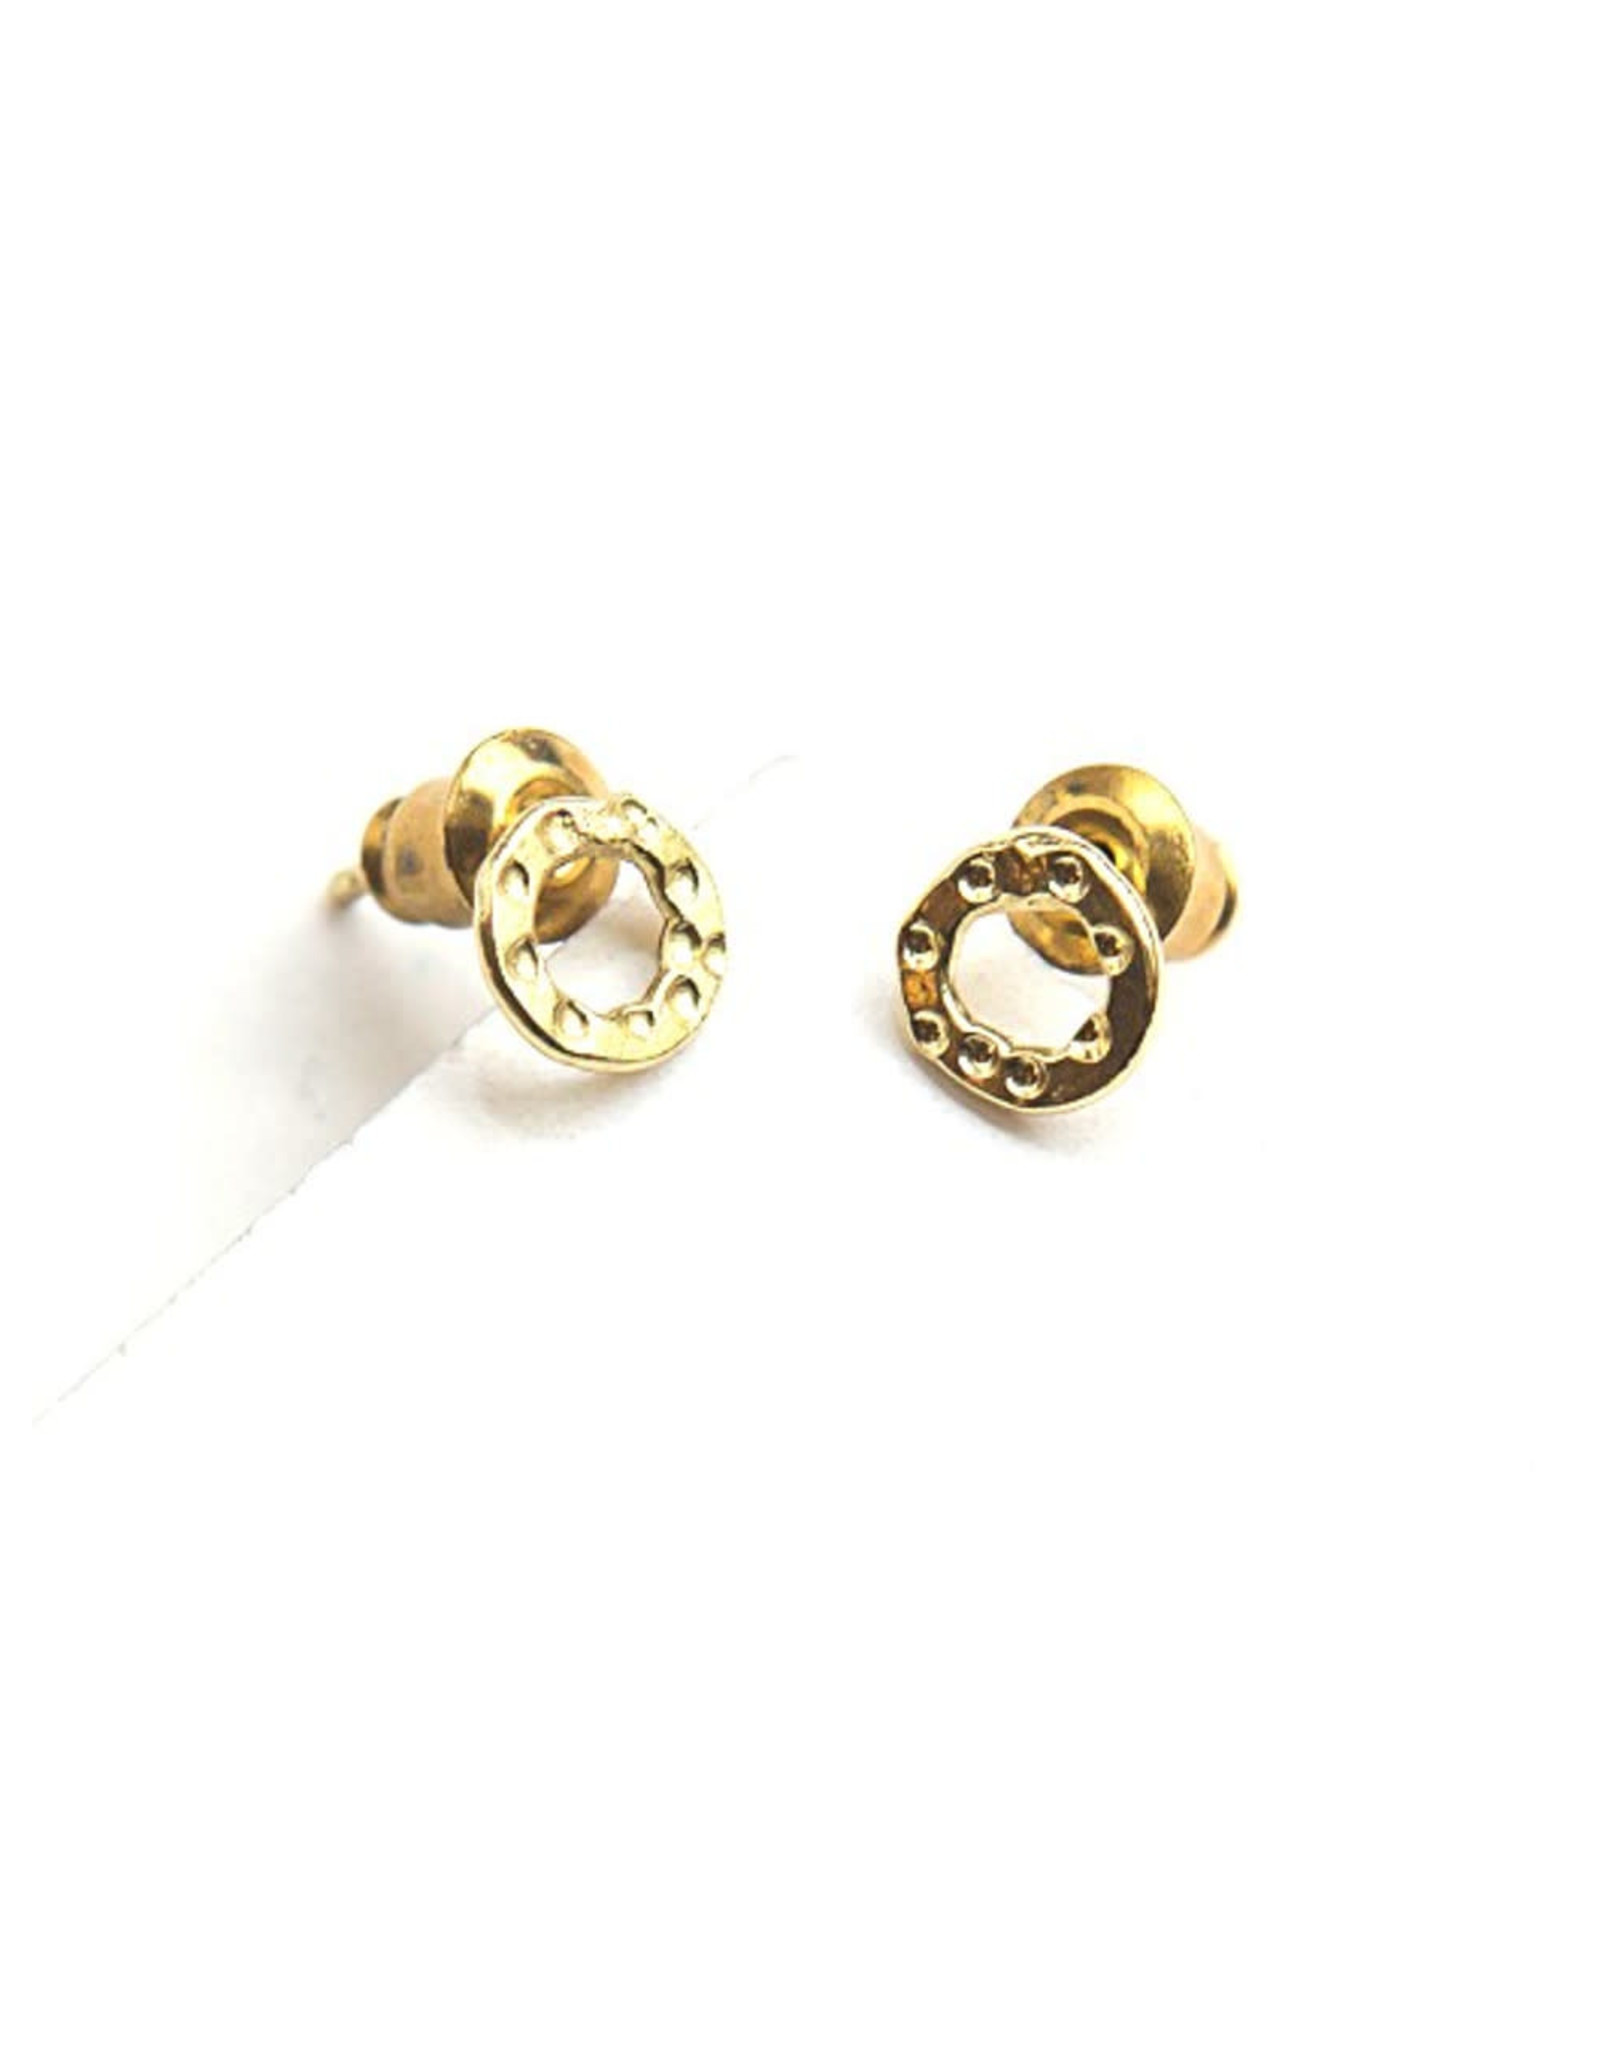 India Simple Circle Stud Earrings - Brass, India